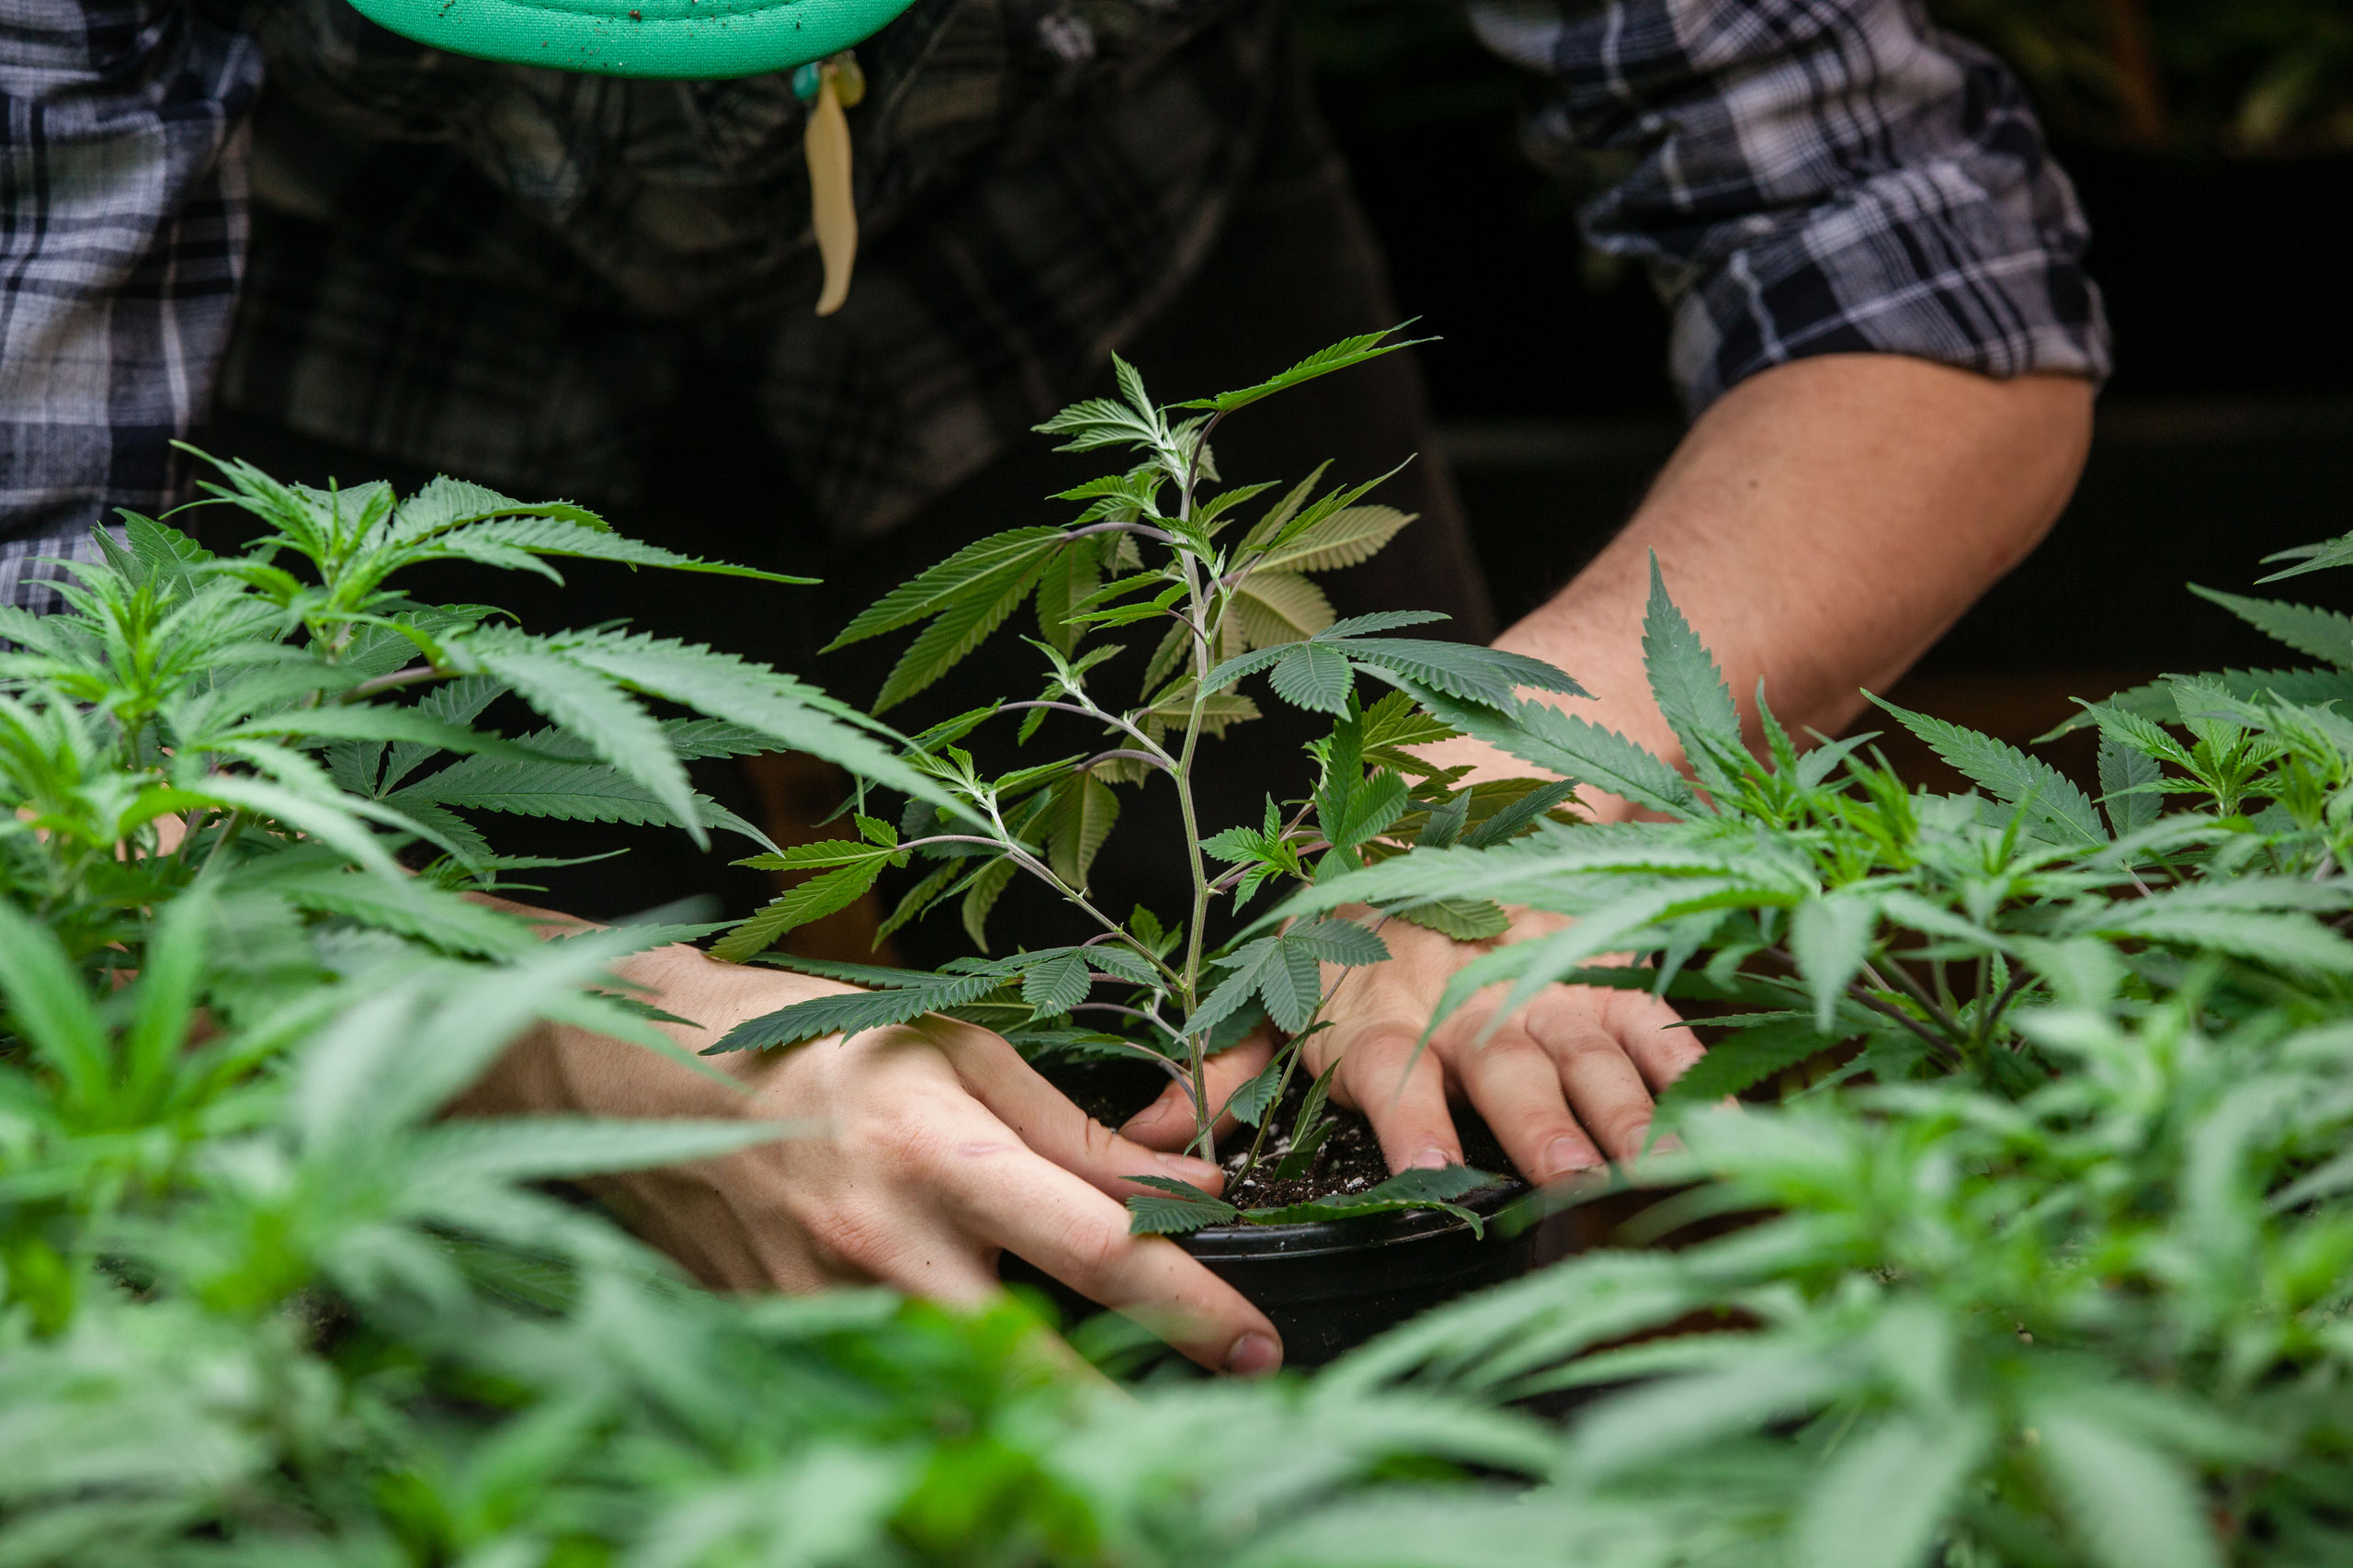 Farmer working with marijuana plants